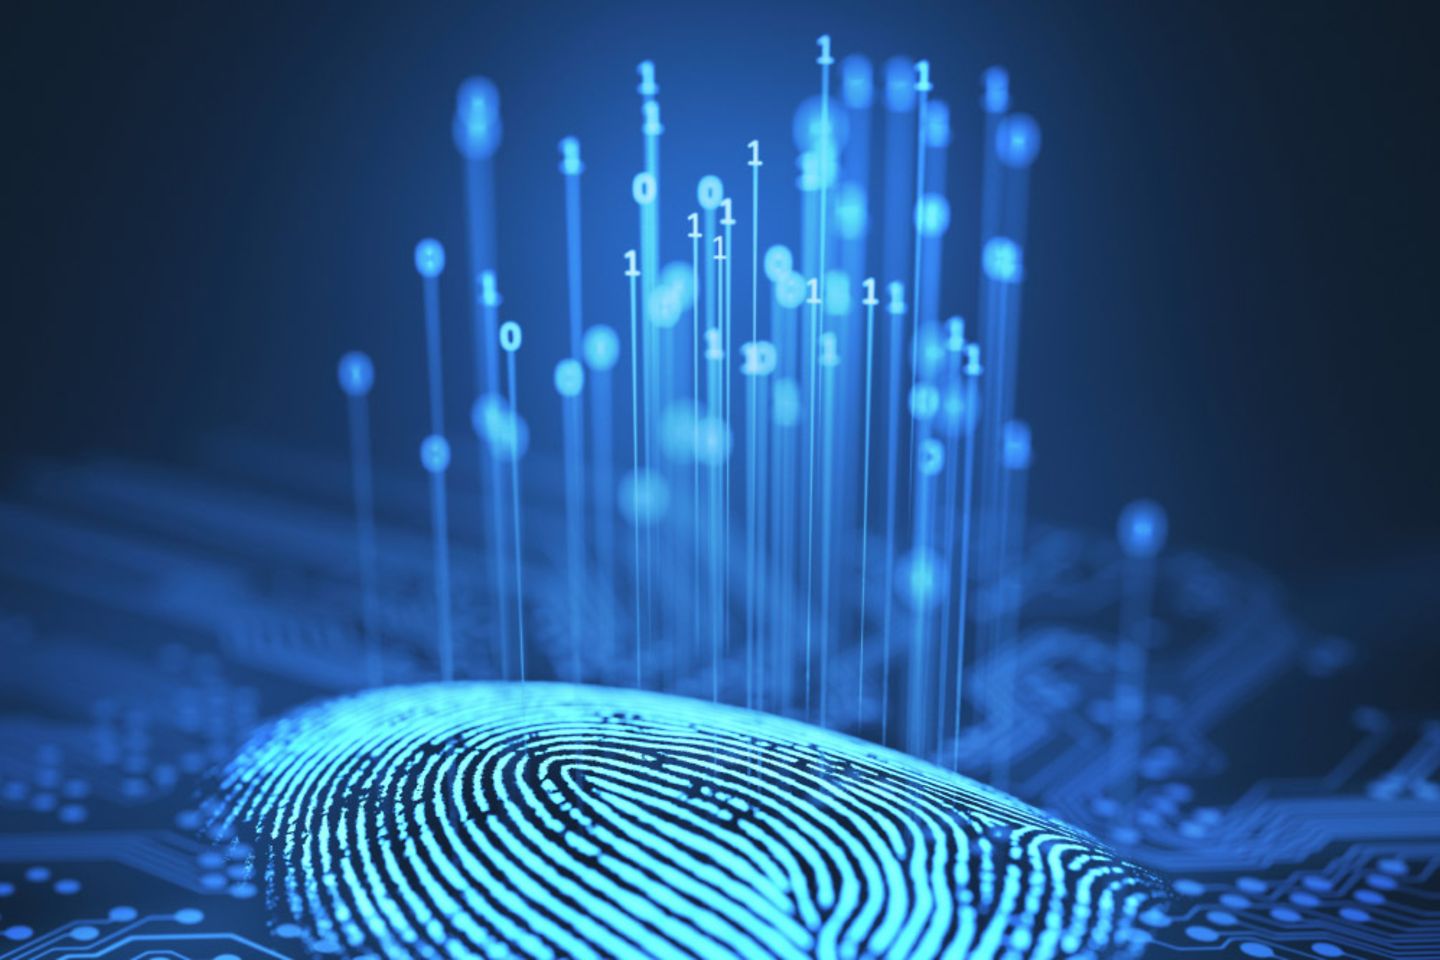 Digital Fingerprint with numbers above